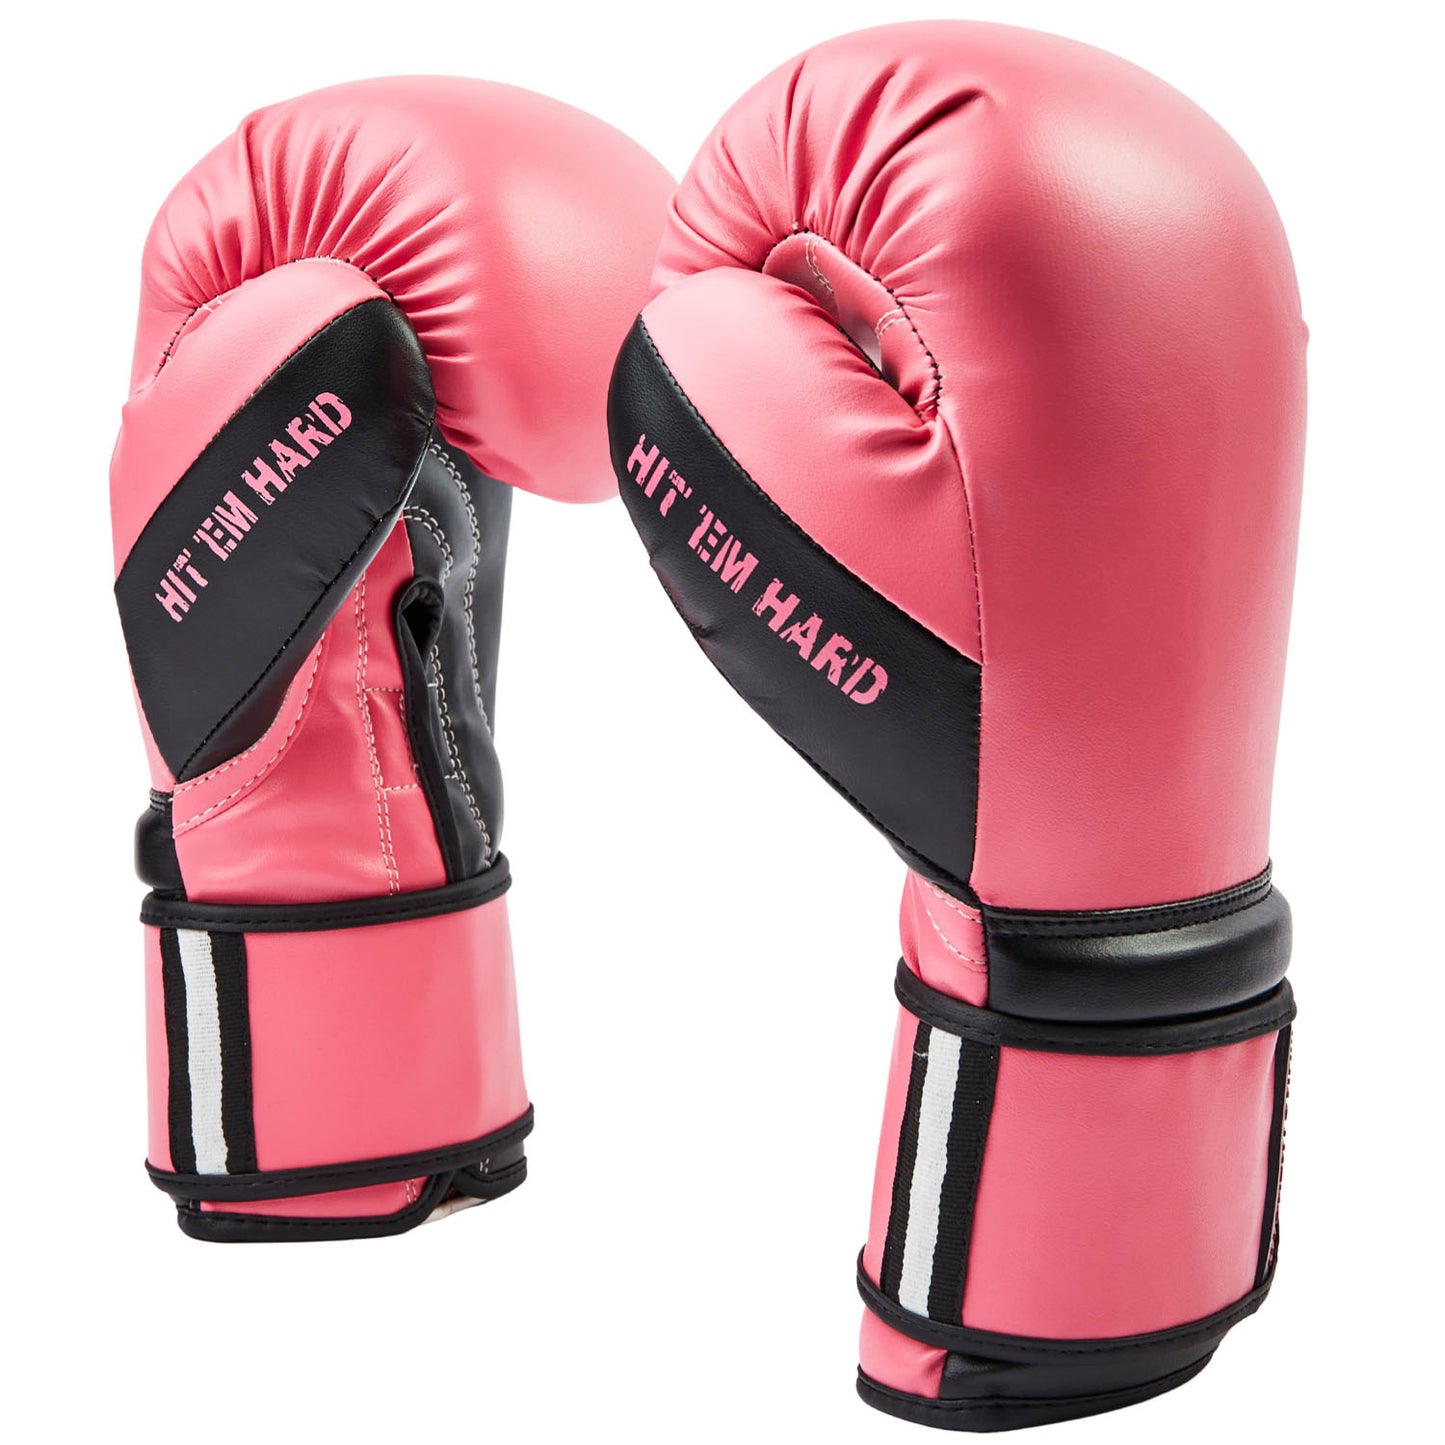 MAXSTRENGTH Women's Training Boxing Gloves Pink/Black